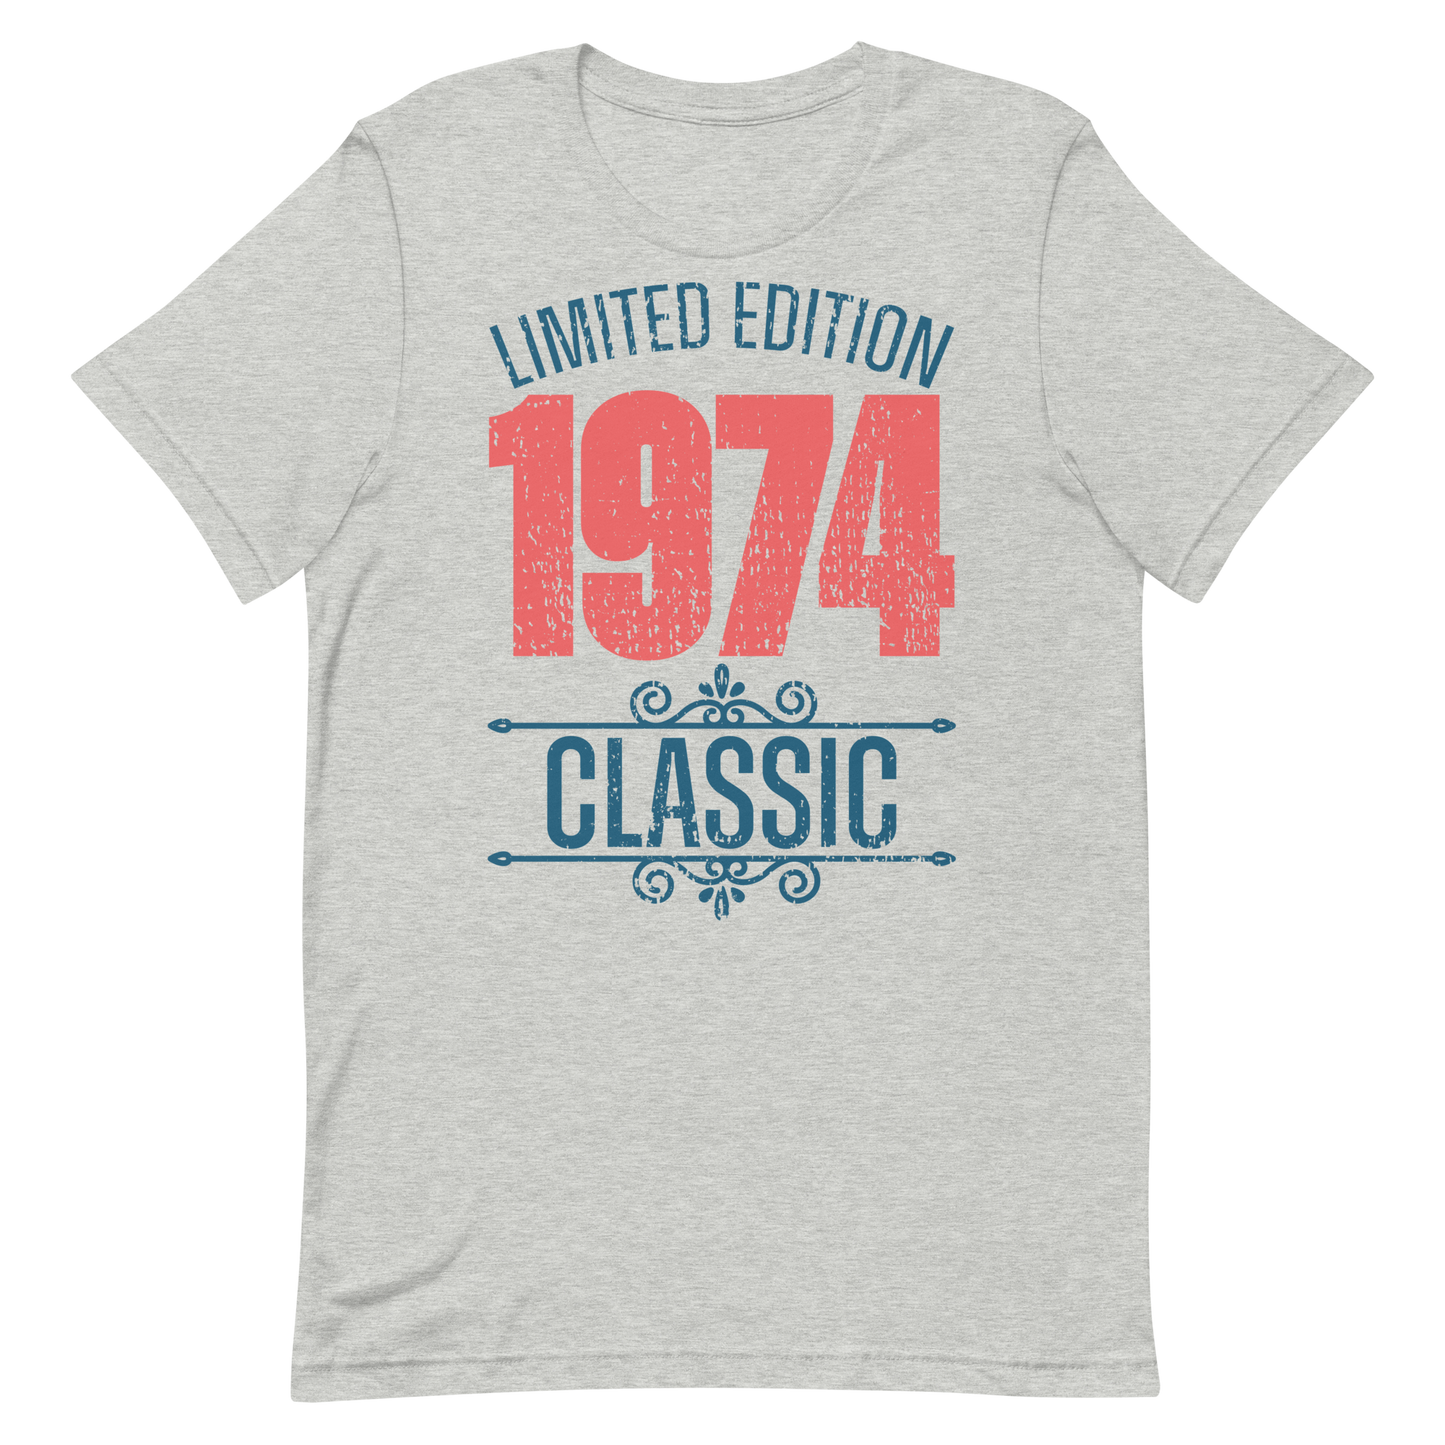 Retro Unisex T-Shirt - Limited Edition 1974 Classic Athletic Heather